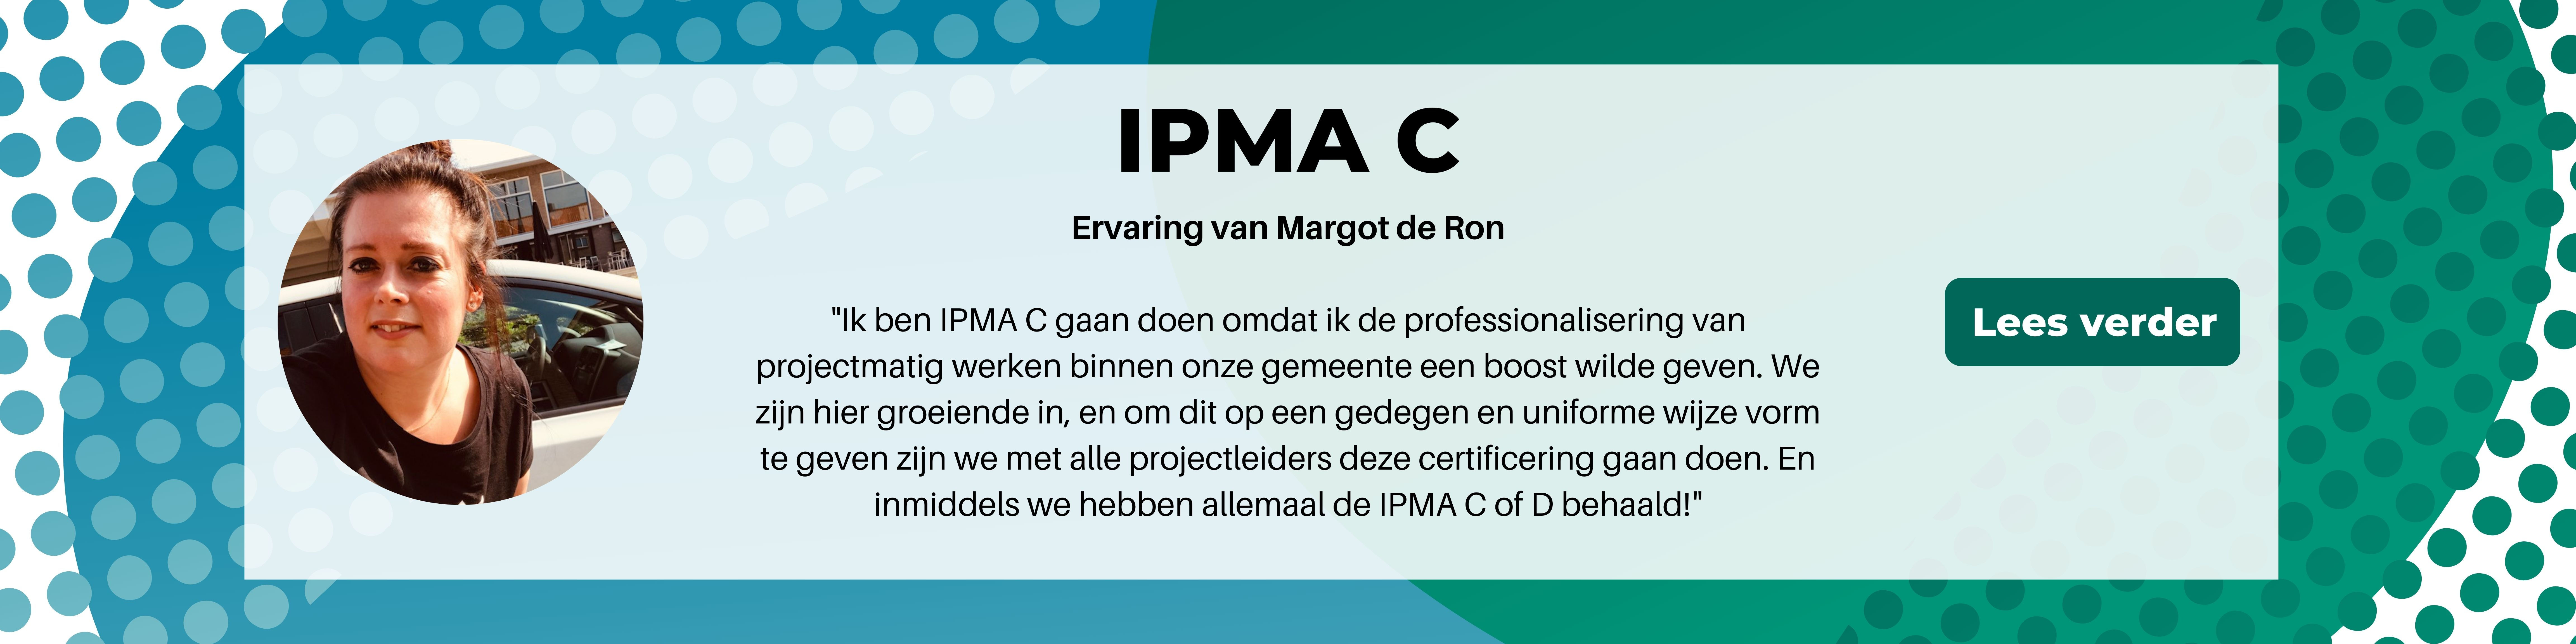 Ervaring IPMA C